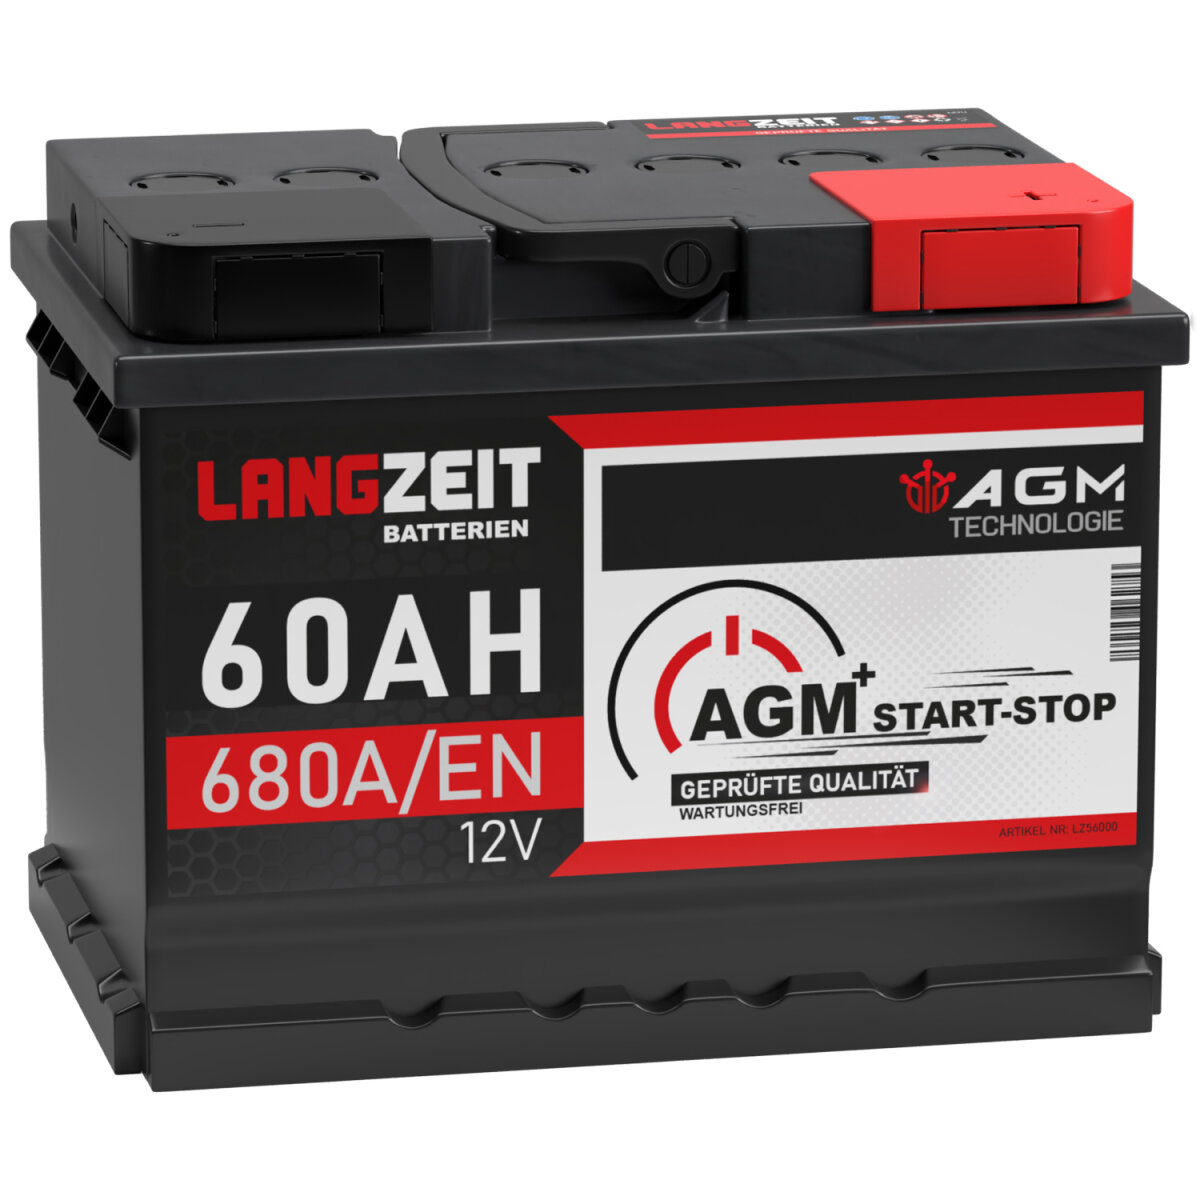 Langzeit Solarbatterie AGM 80Ah 12V, 114,20 €